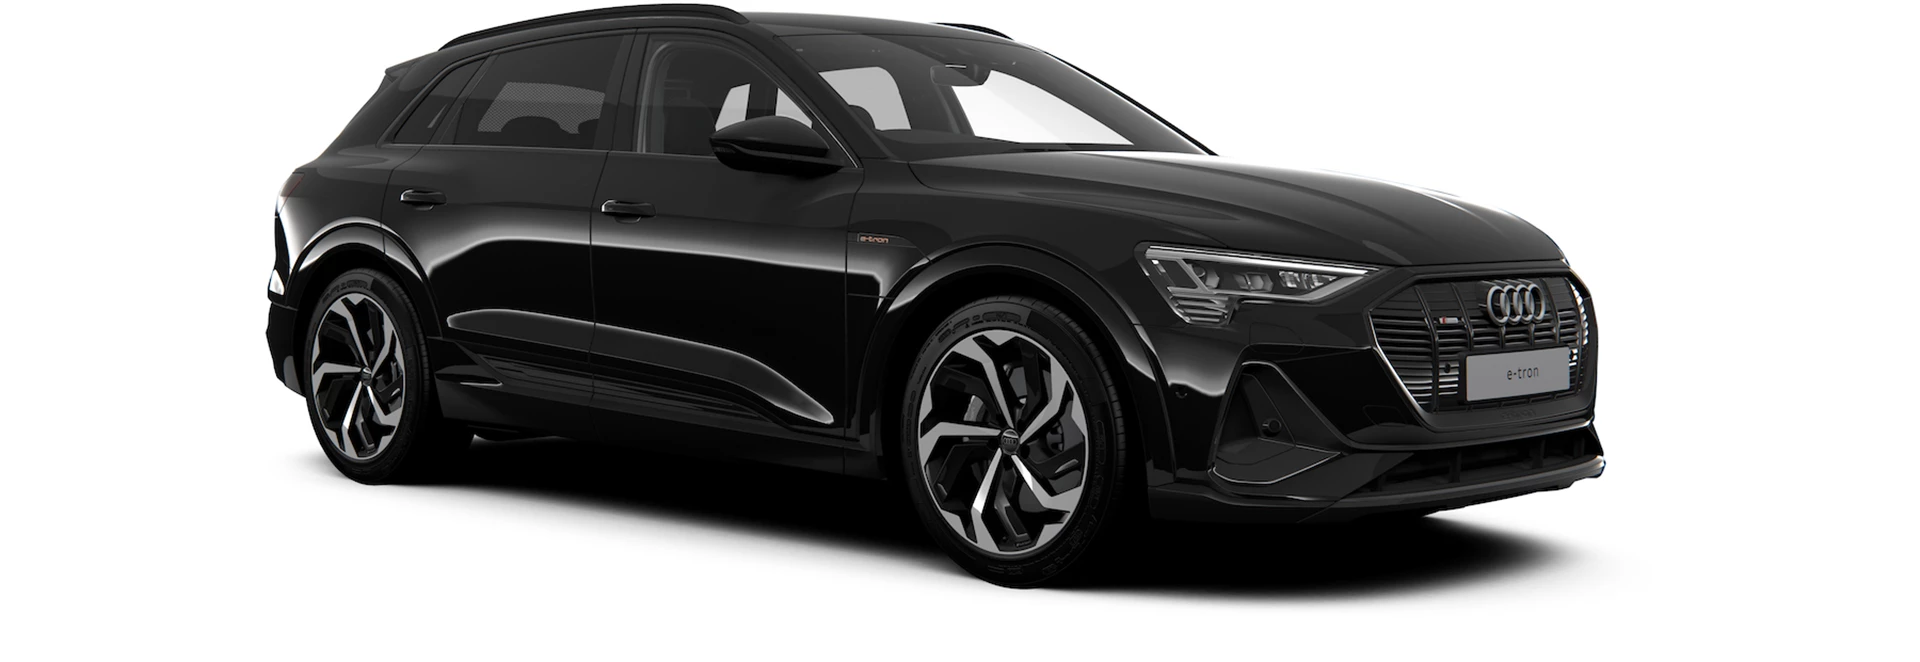 Audi announces updates to electric e-tron SUV 